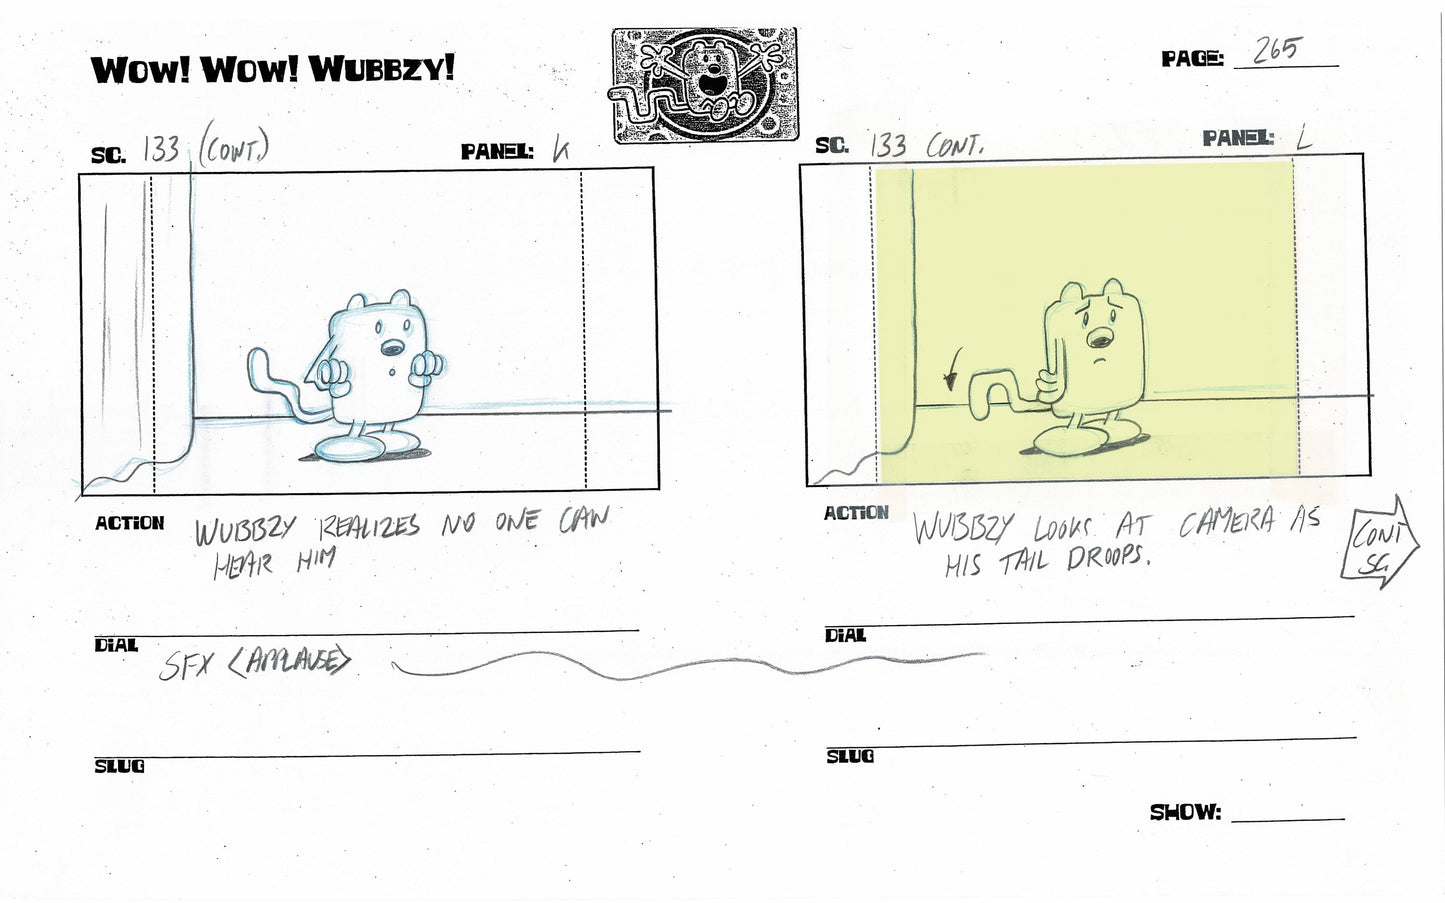 Wow! Wow! Wubbzy! Walden Original Production storyboard NICKELODEON 2006-2010 p265